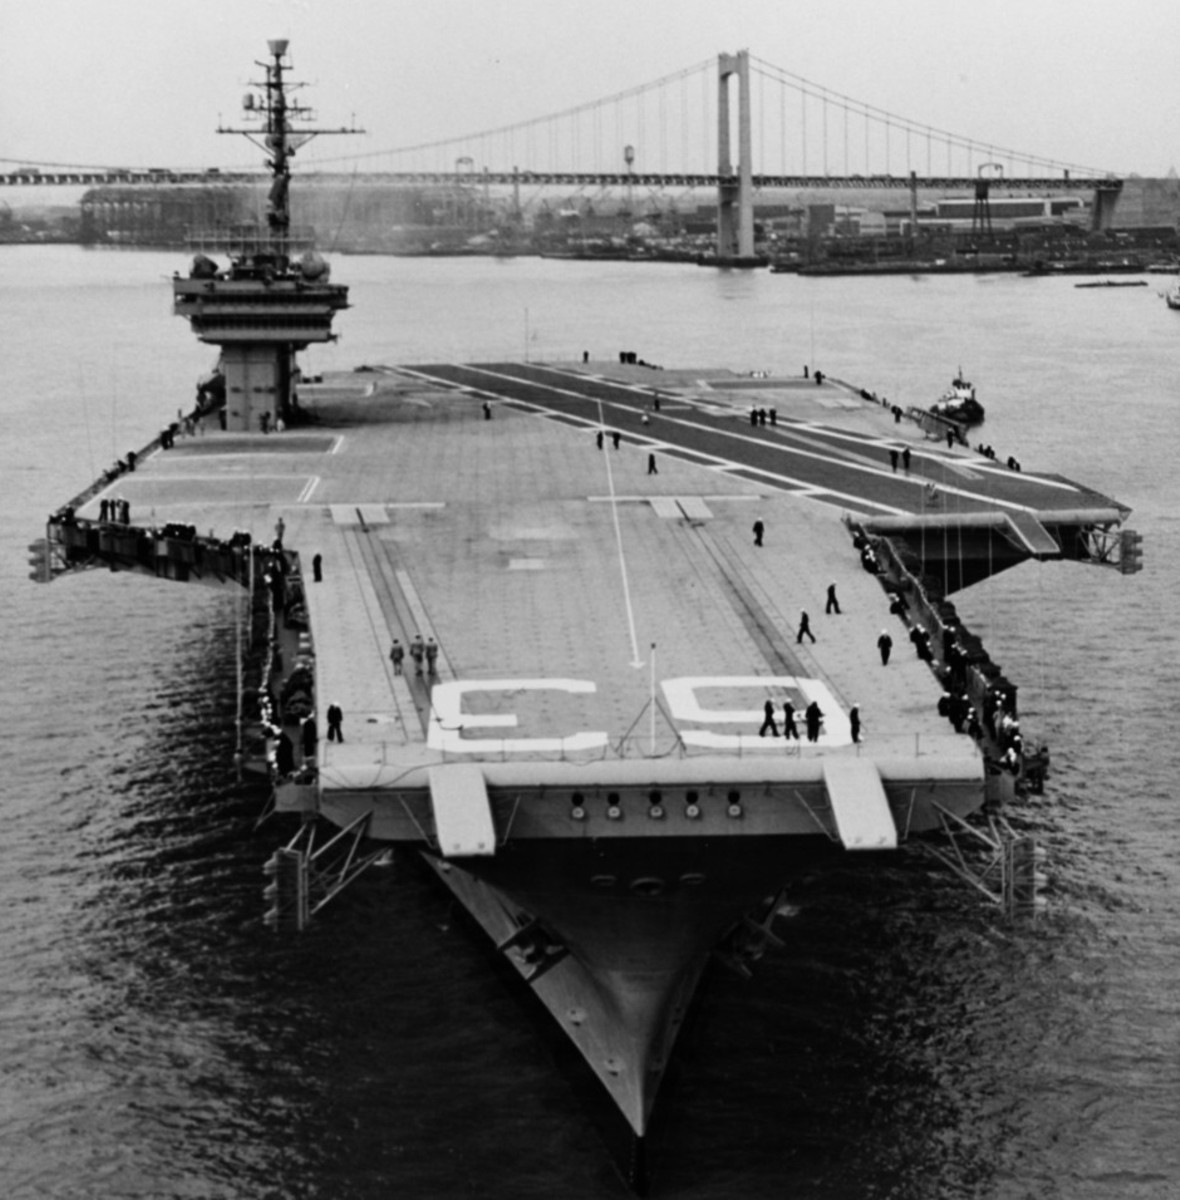 cva-63 uss kitty hawk aircraft carrier philadelphia naval shipyard 271